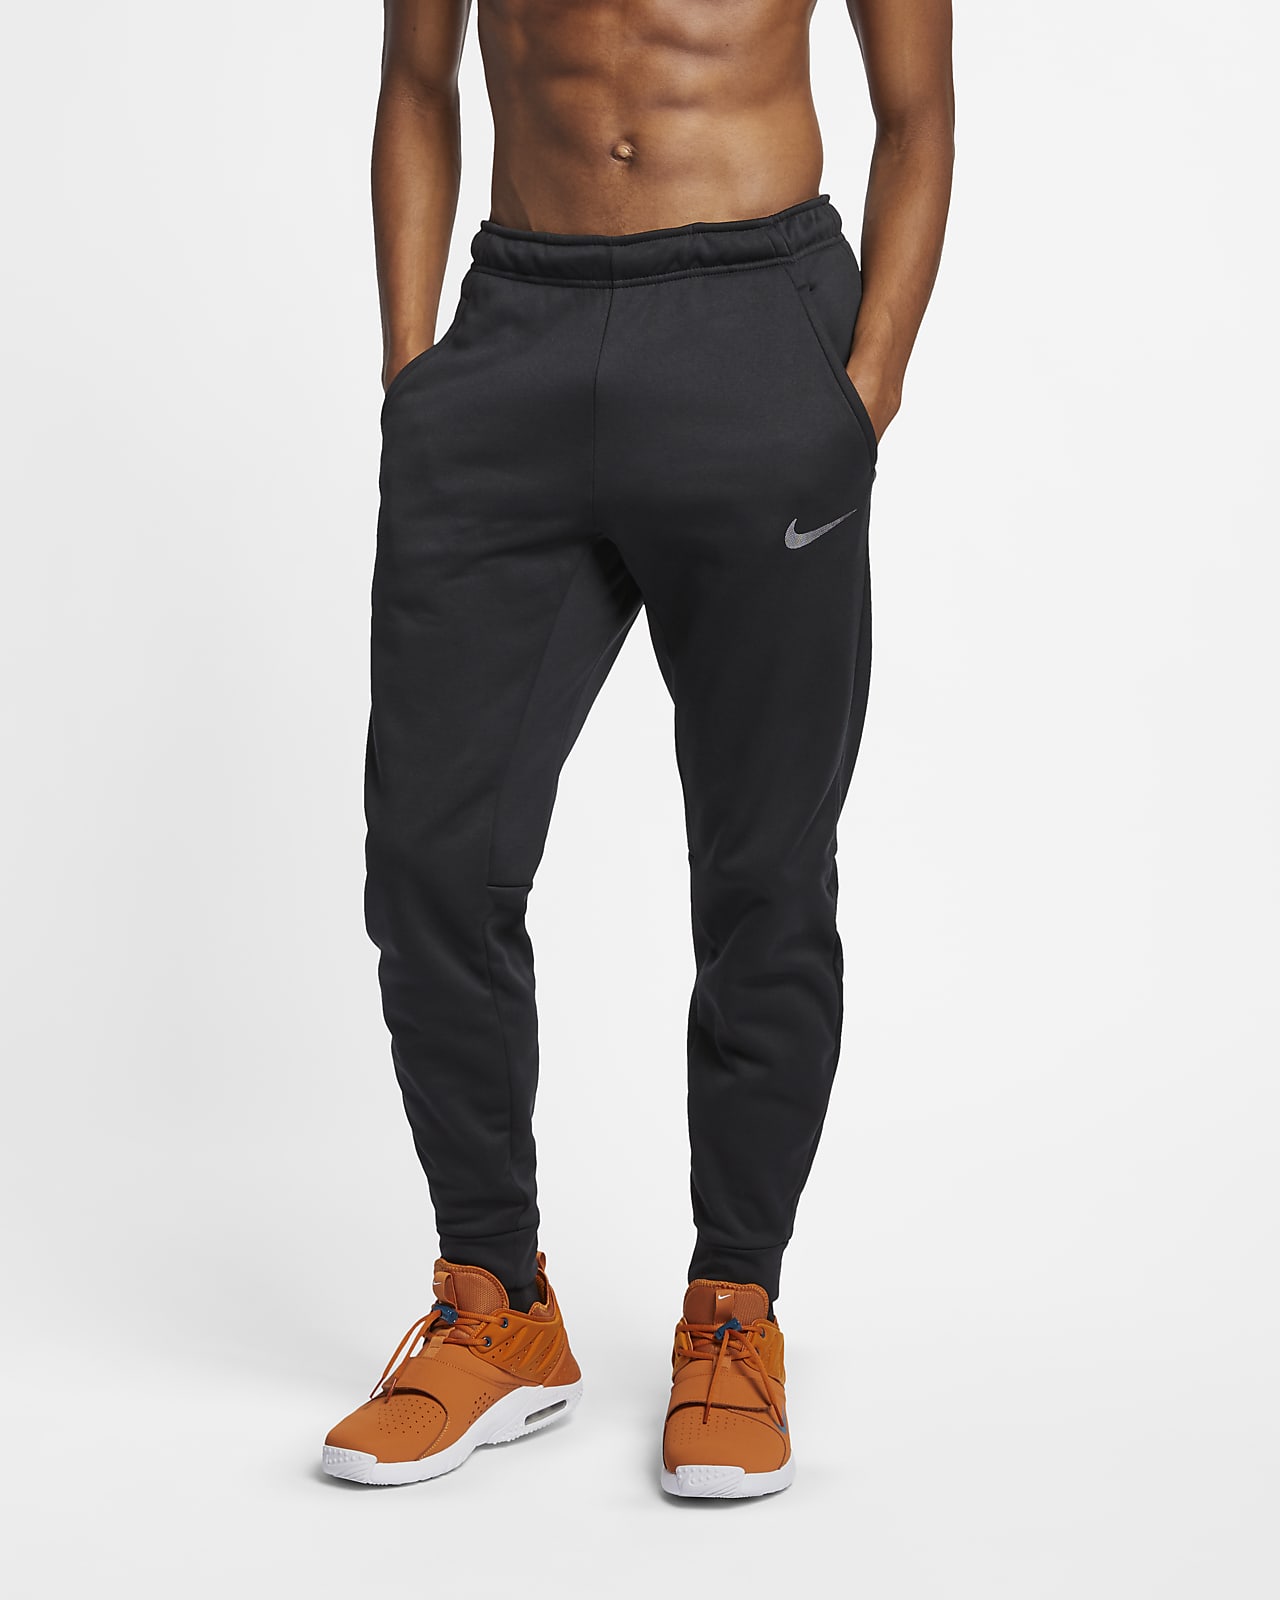 nike training jogger pants in black